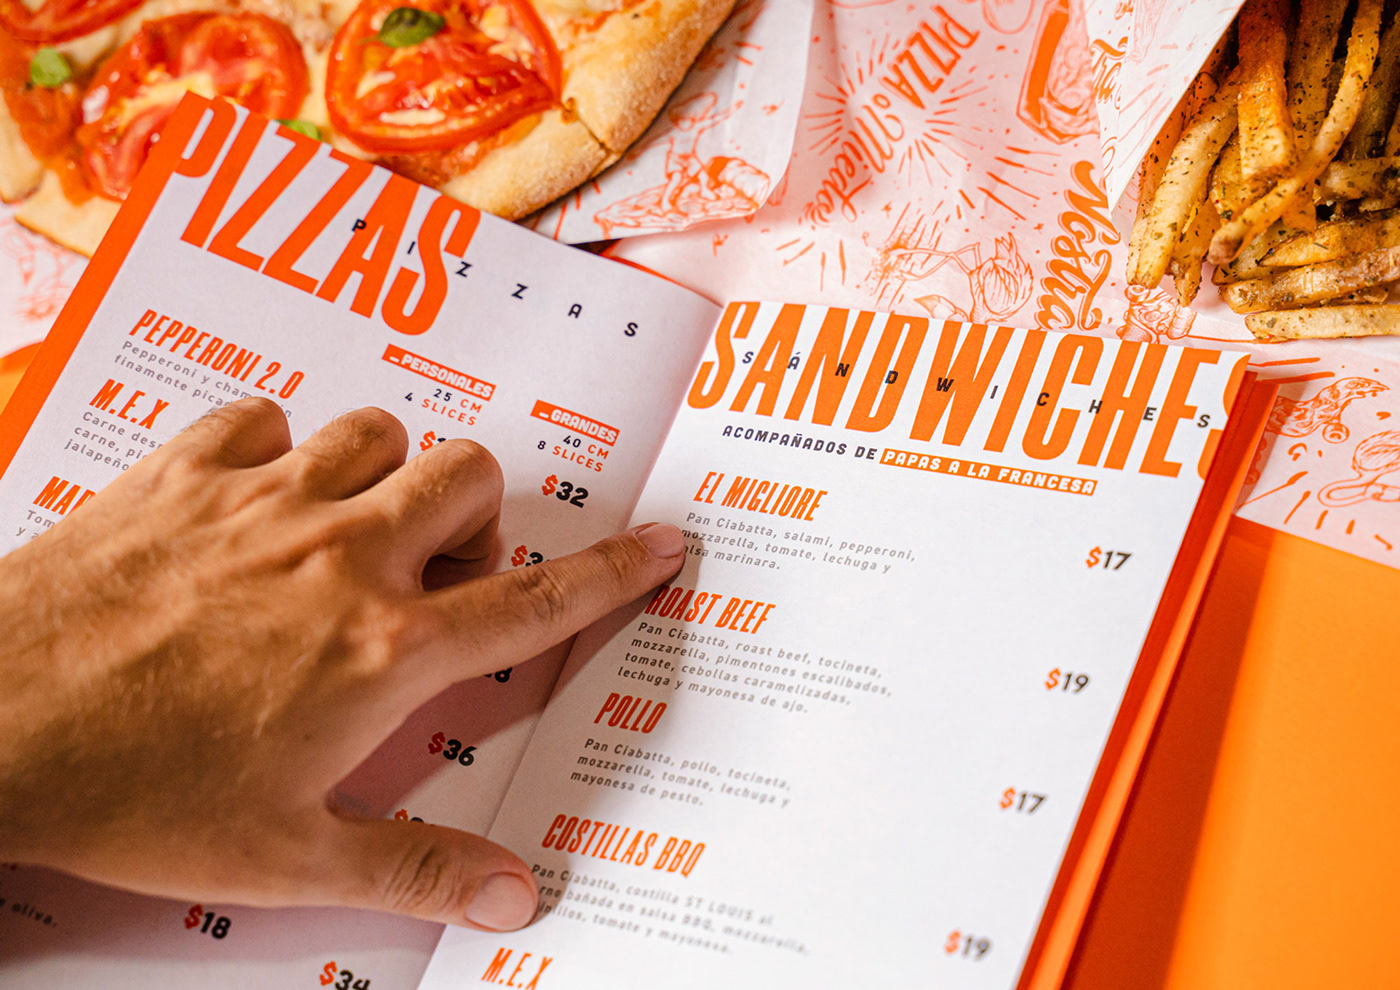 brand comida delivery fast menu Pizza Street Street Food visual identity fastfood